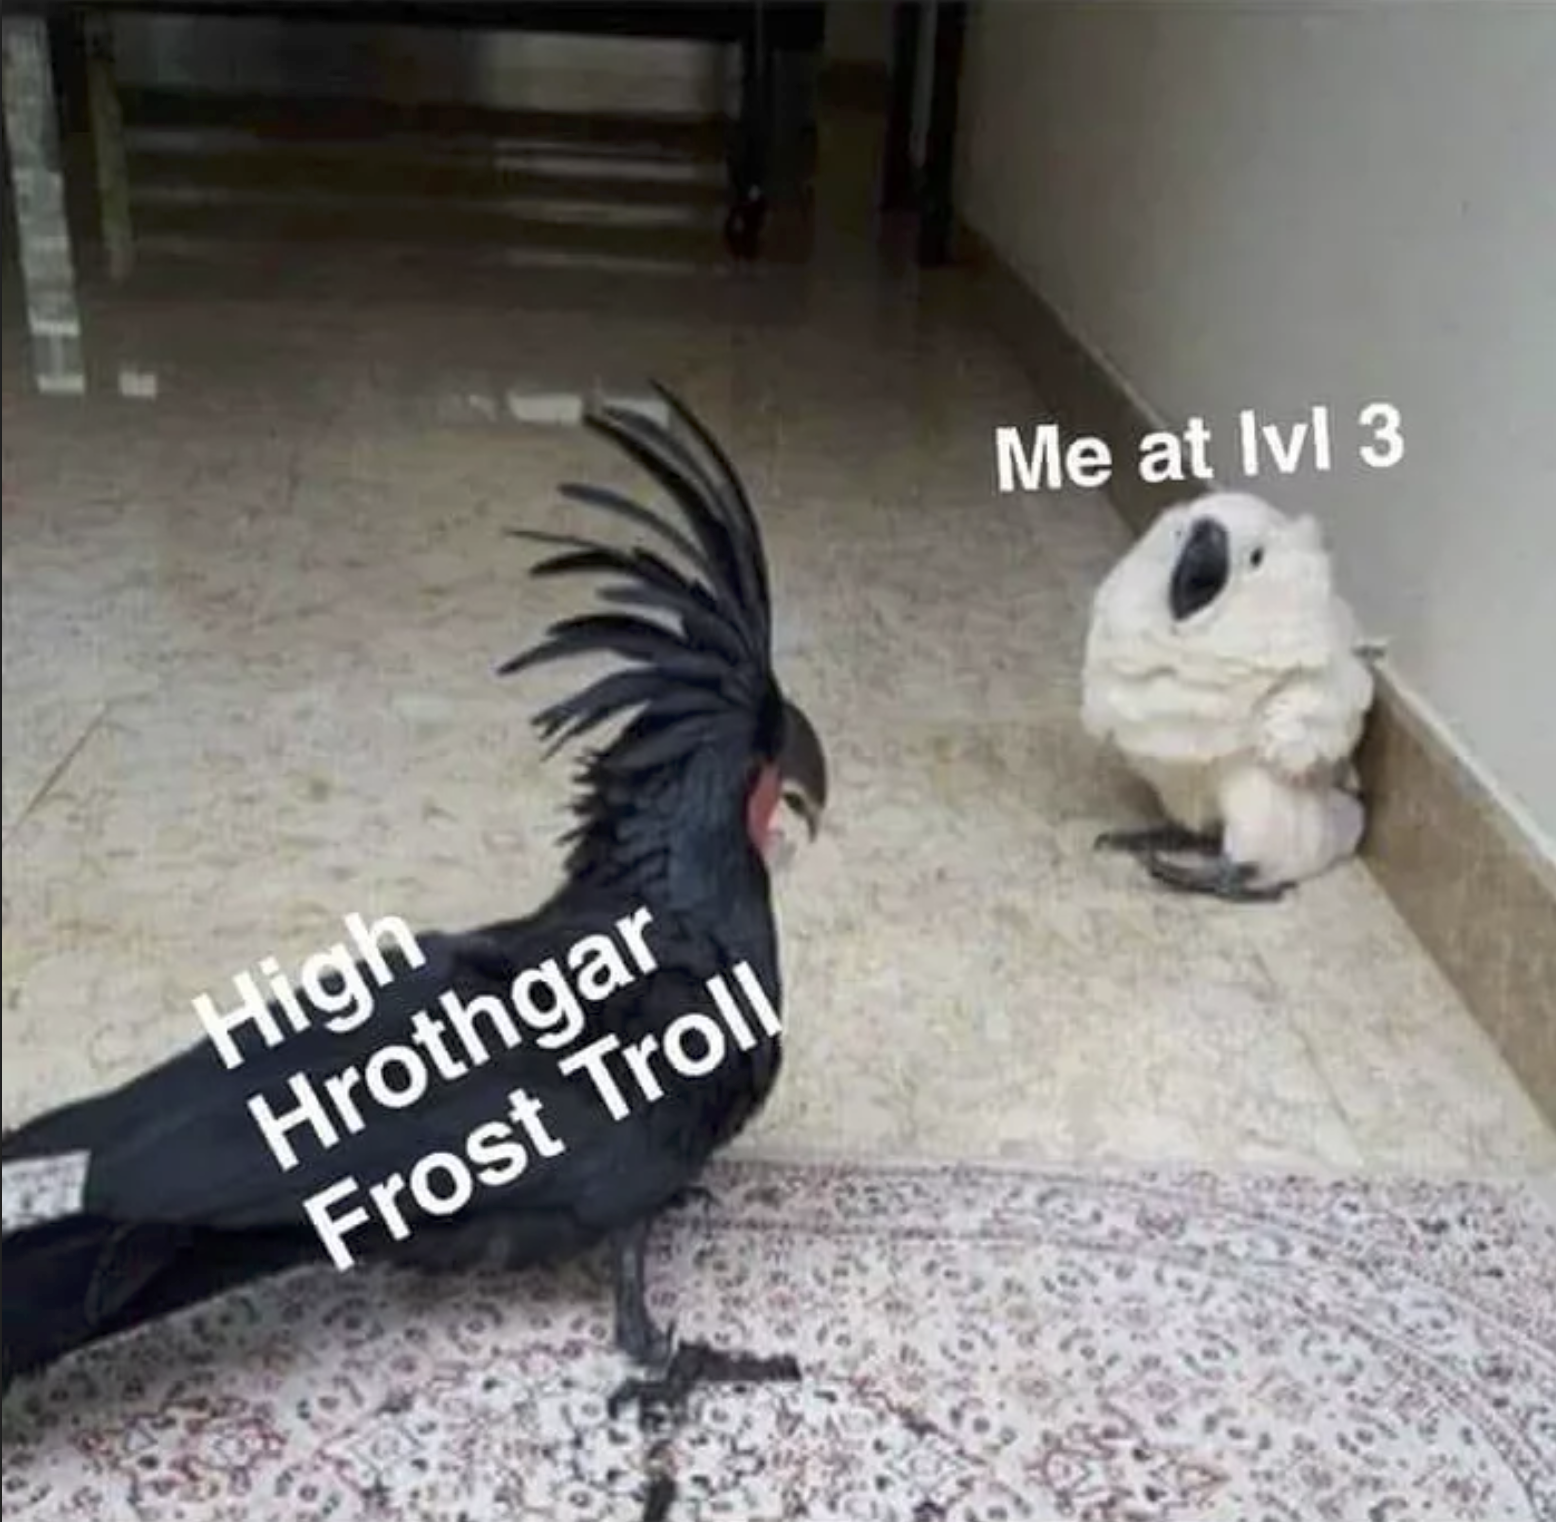 goth girl yelling at me meme - Me at lvl 3 High Hrothgar Frost Troll